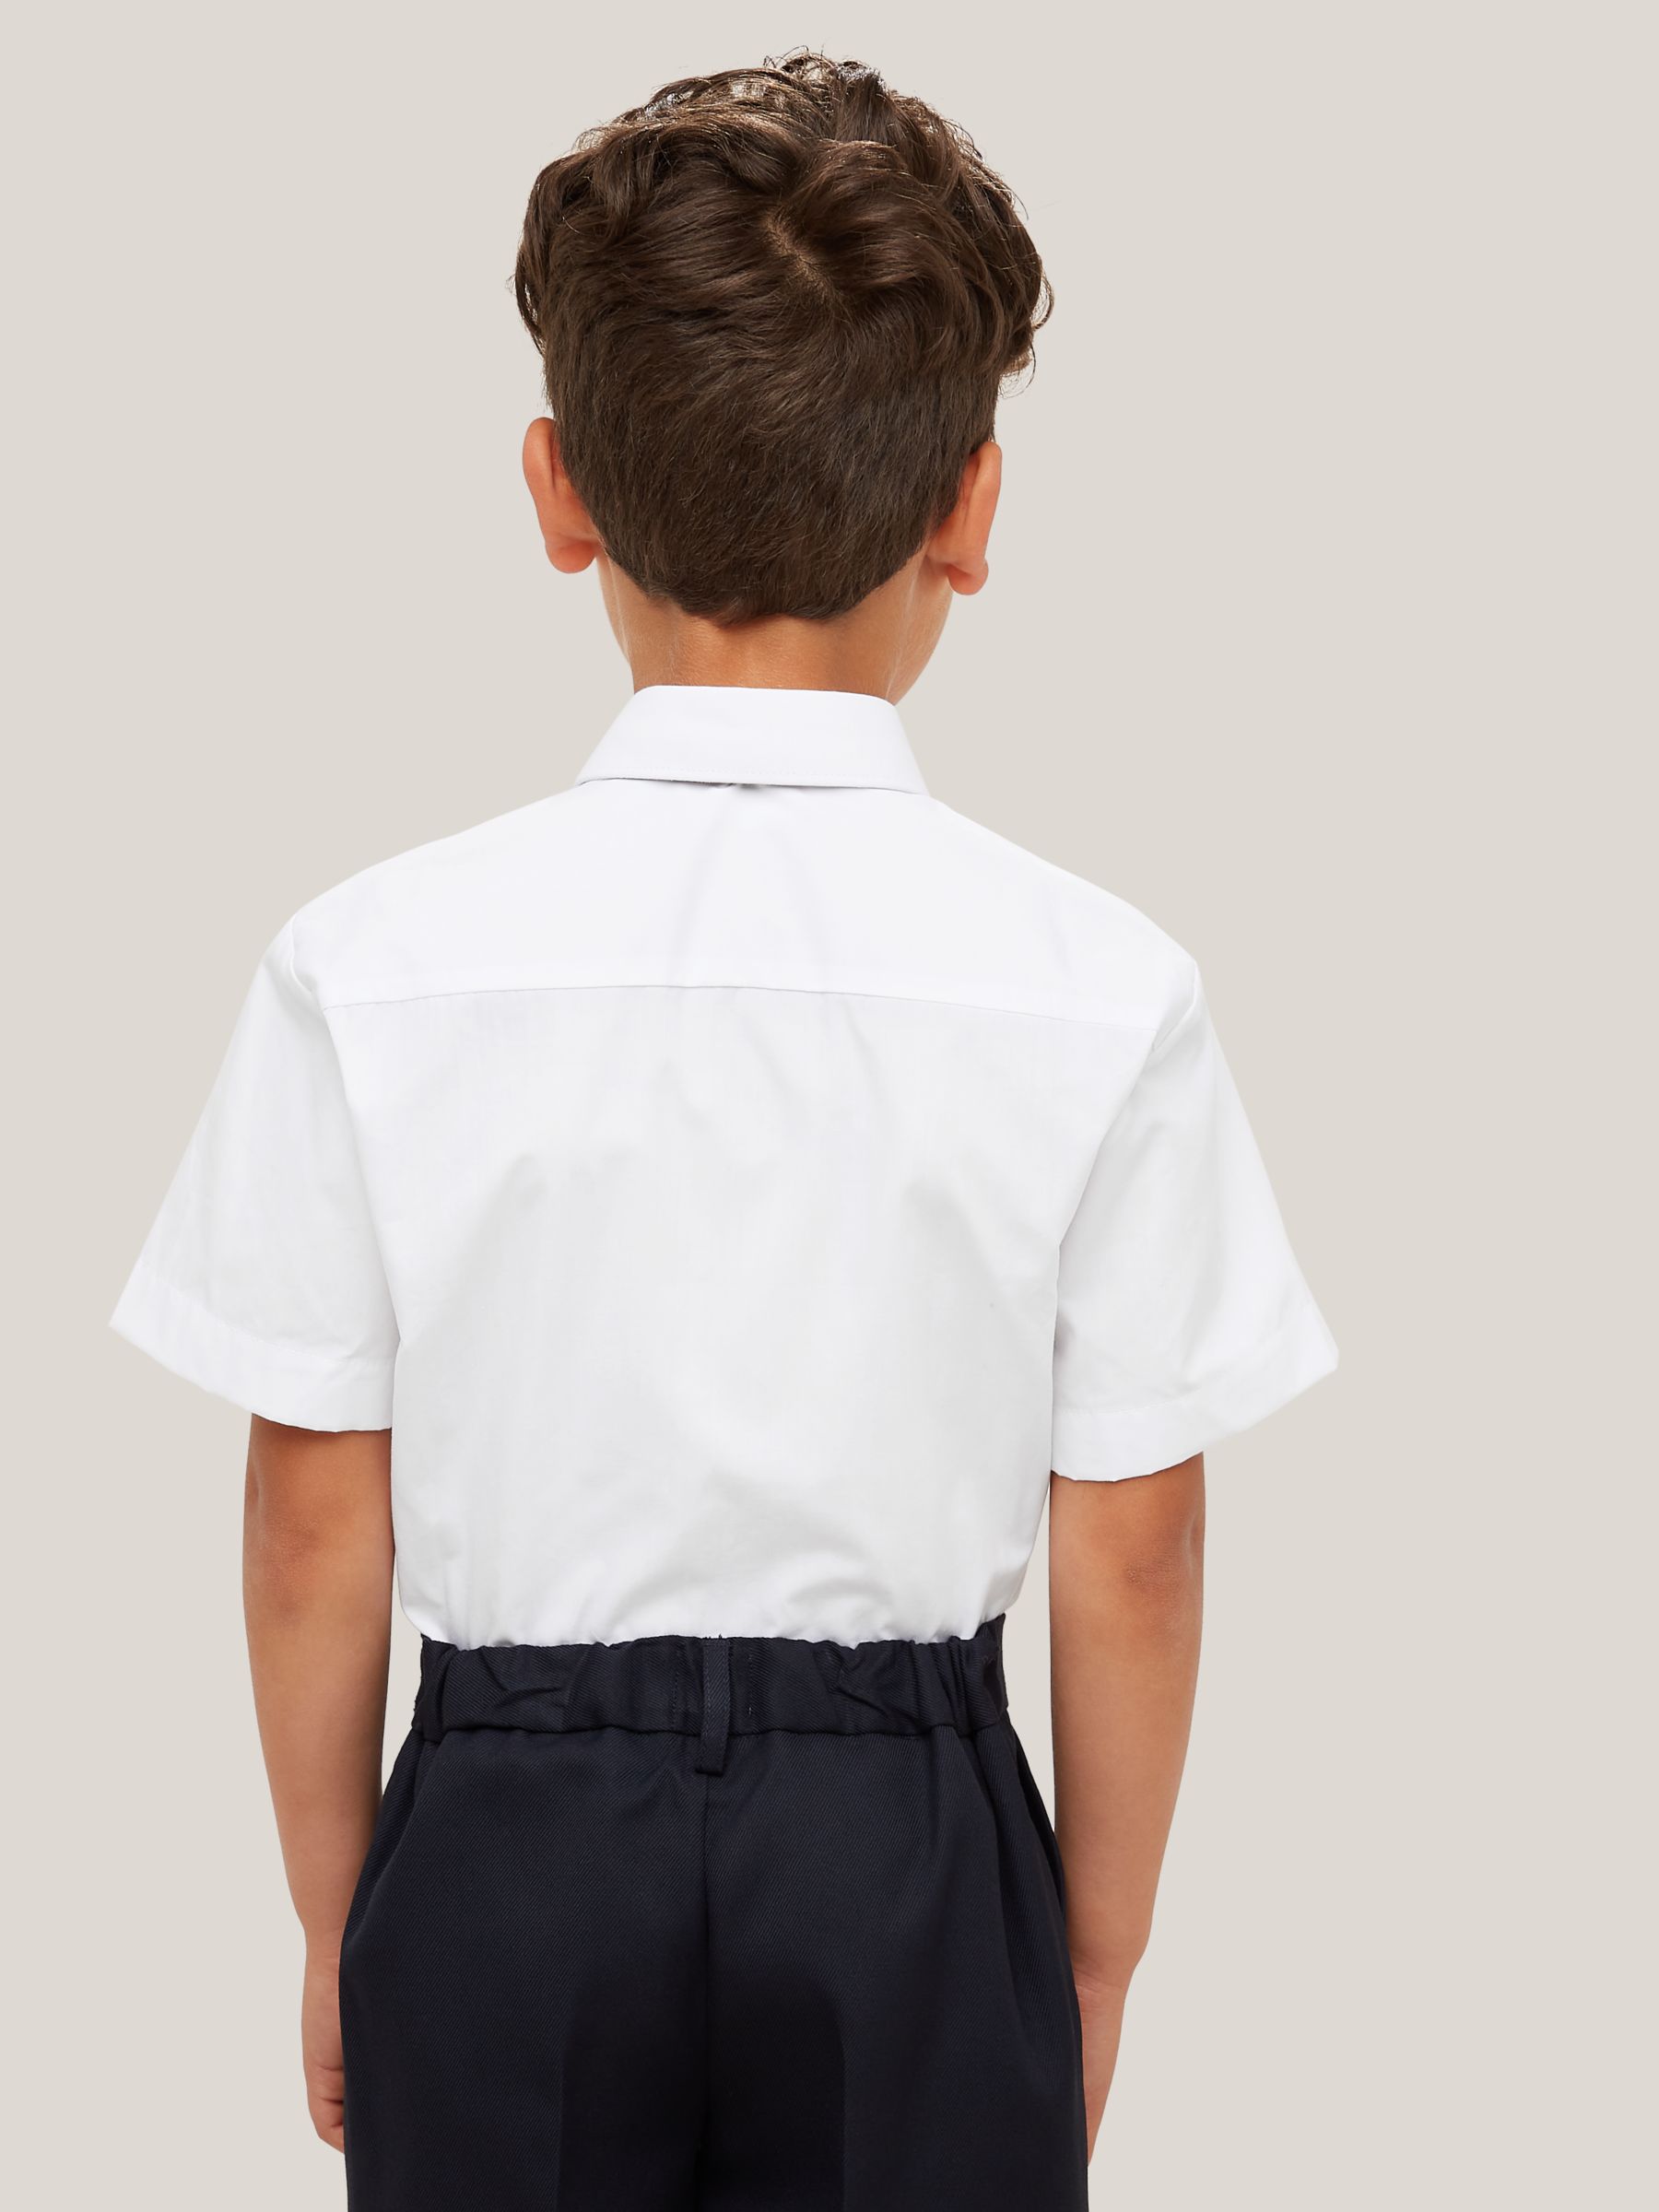 Buy John Lewis ANYDAY The Basics Boys' Short Sleeved Shirt, Pack of 3 Online at johnlewis.com